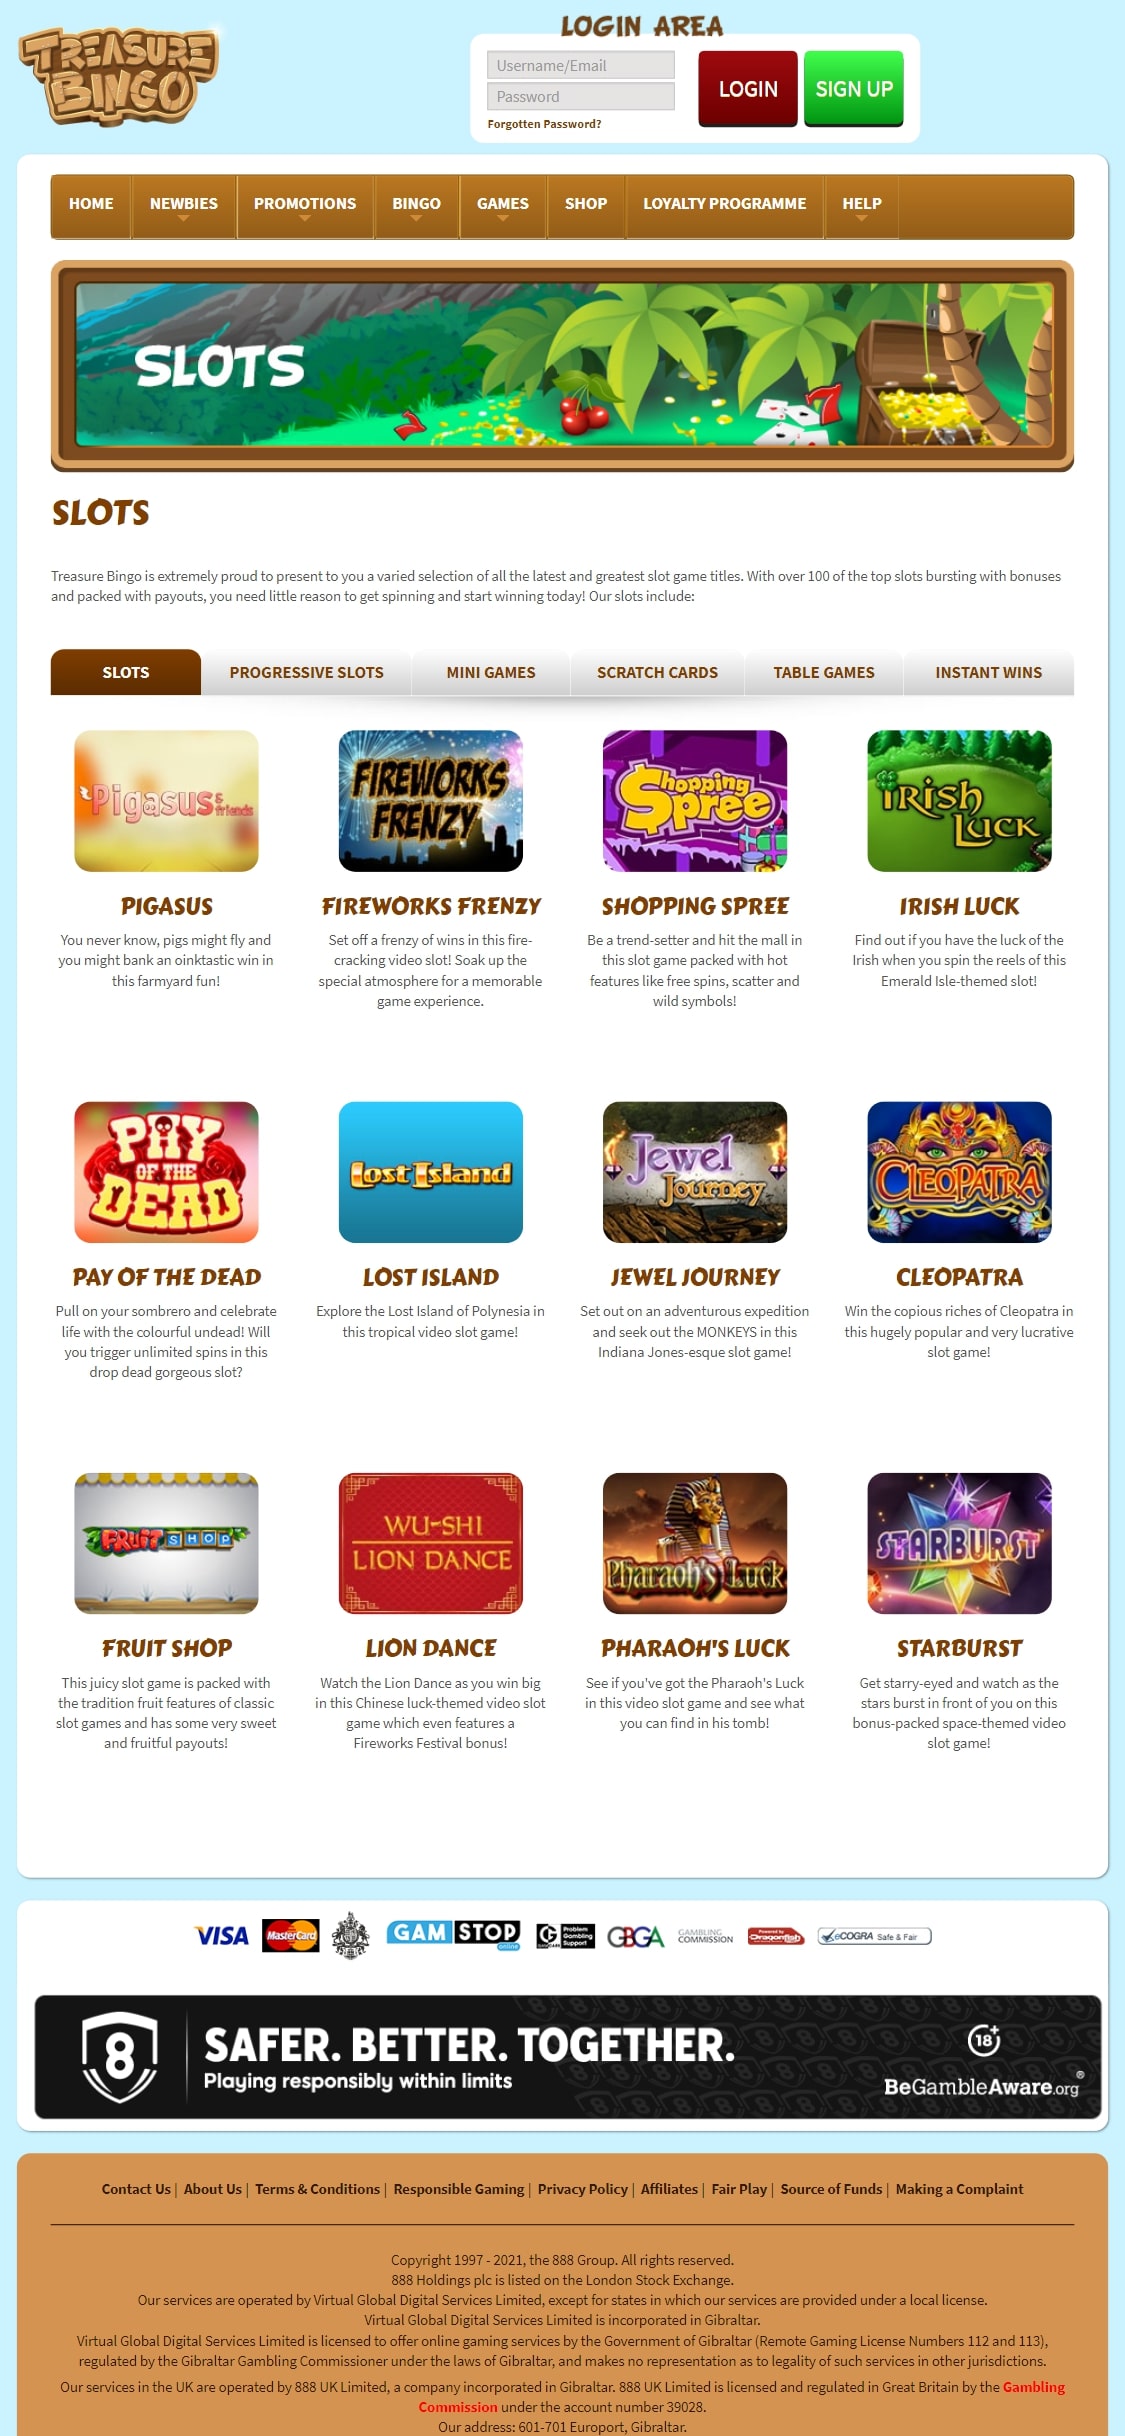 Treasure Bingo Casino Mobile Games Review